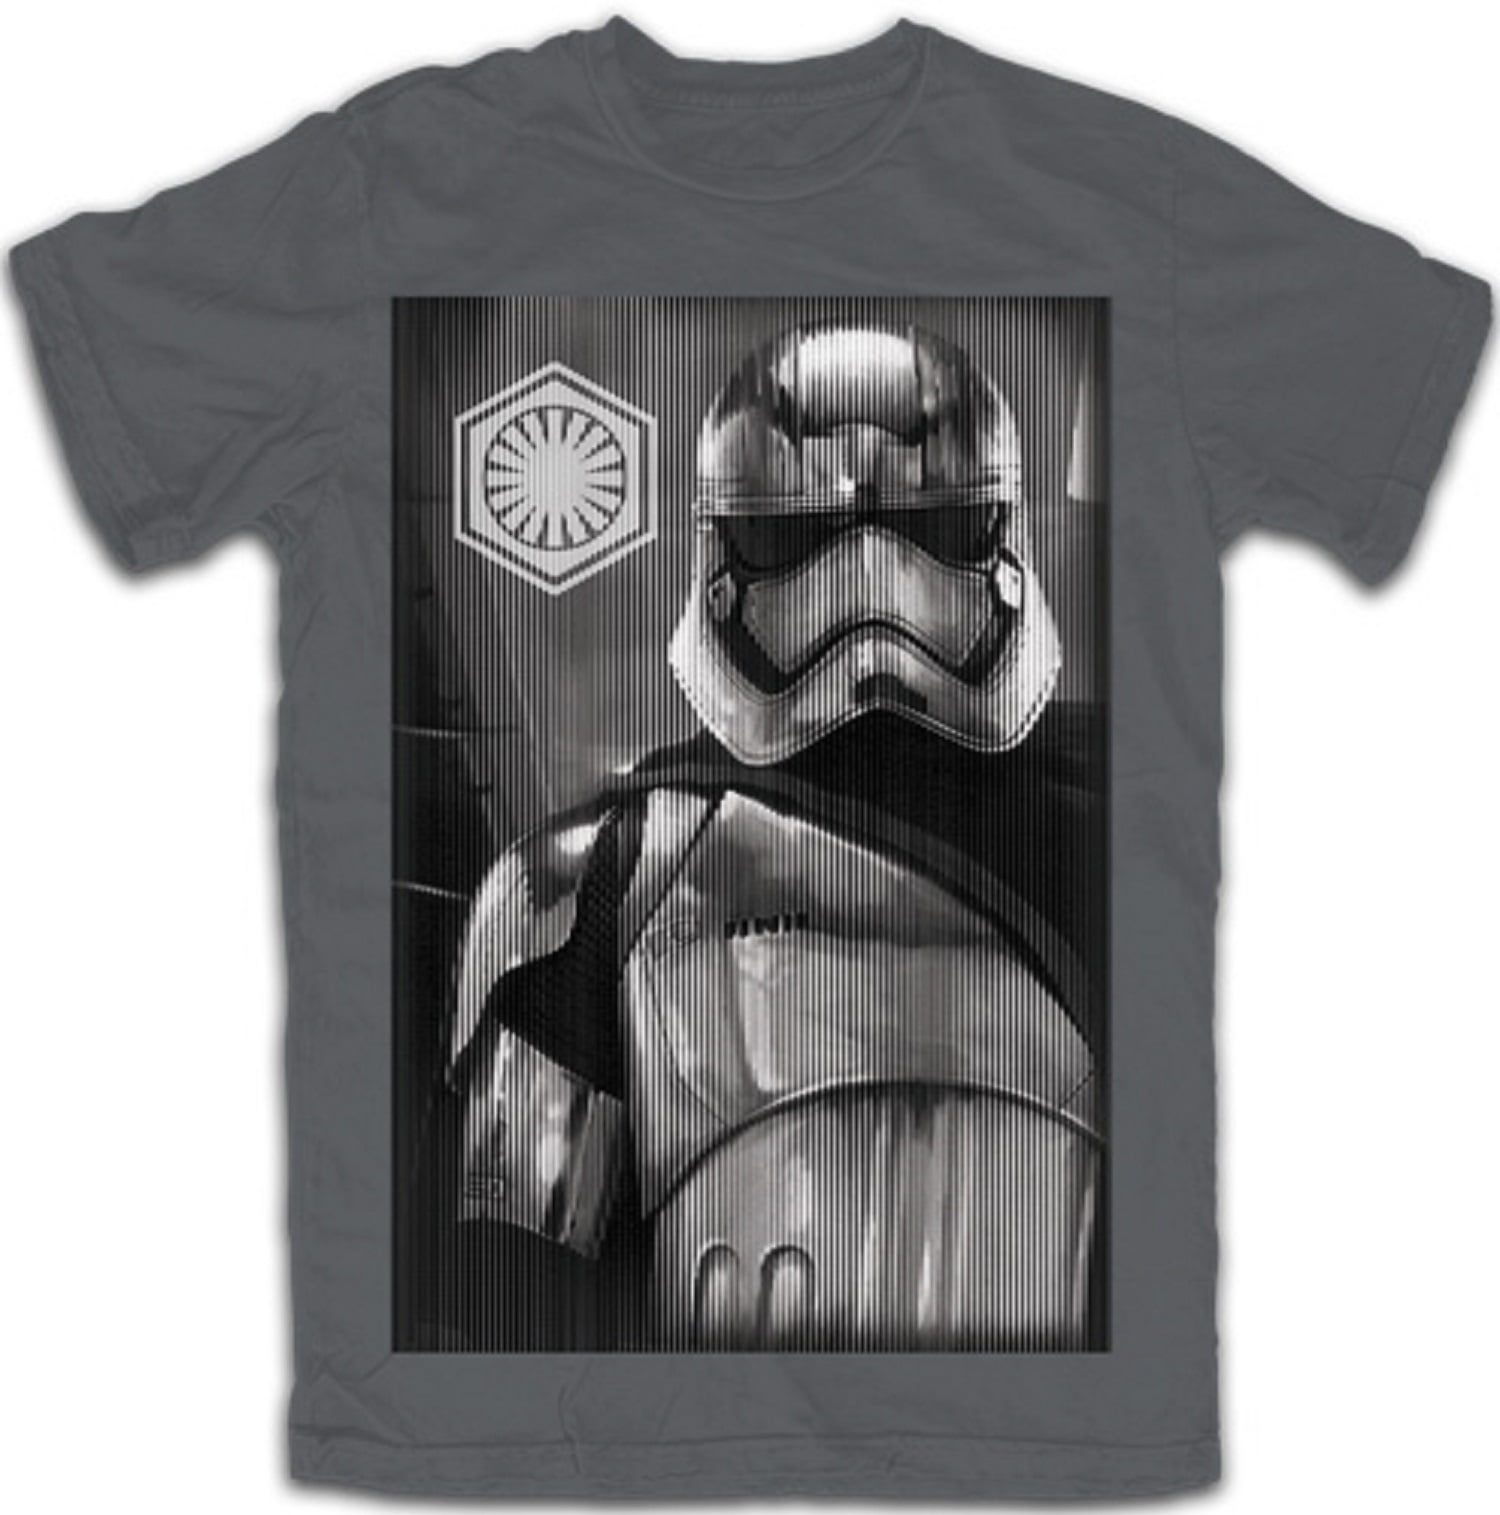 Retro Star Wars Darth Vader Cell Phone Selfie T-Shirt New Sz Med Heather Gray 